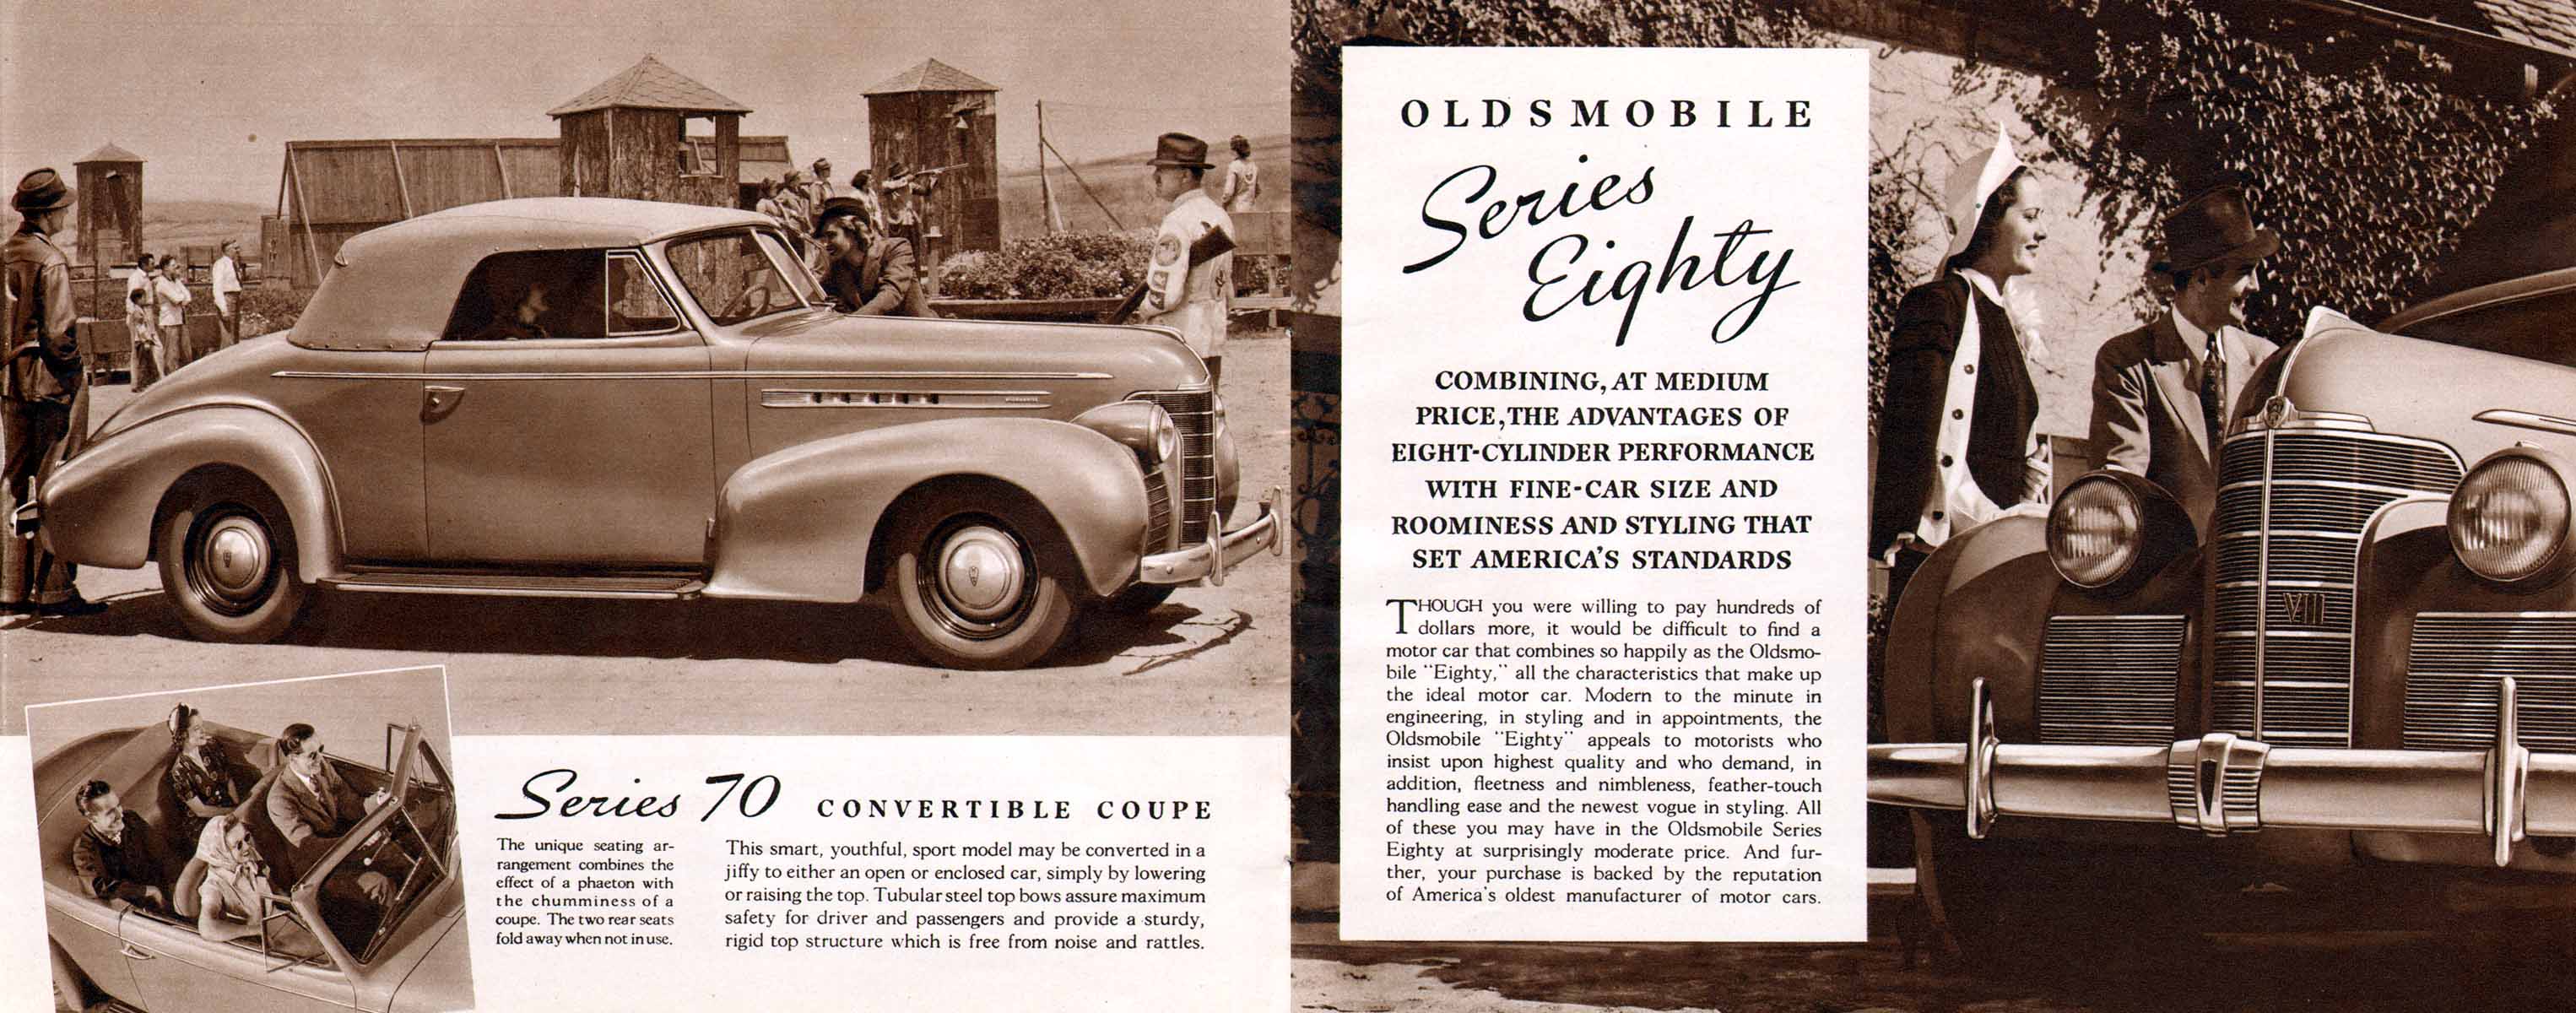 1939 Oldsmobile Motor Cars Brochure Page 1